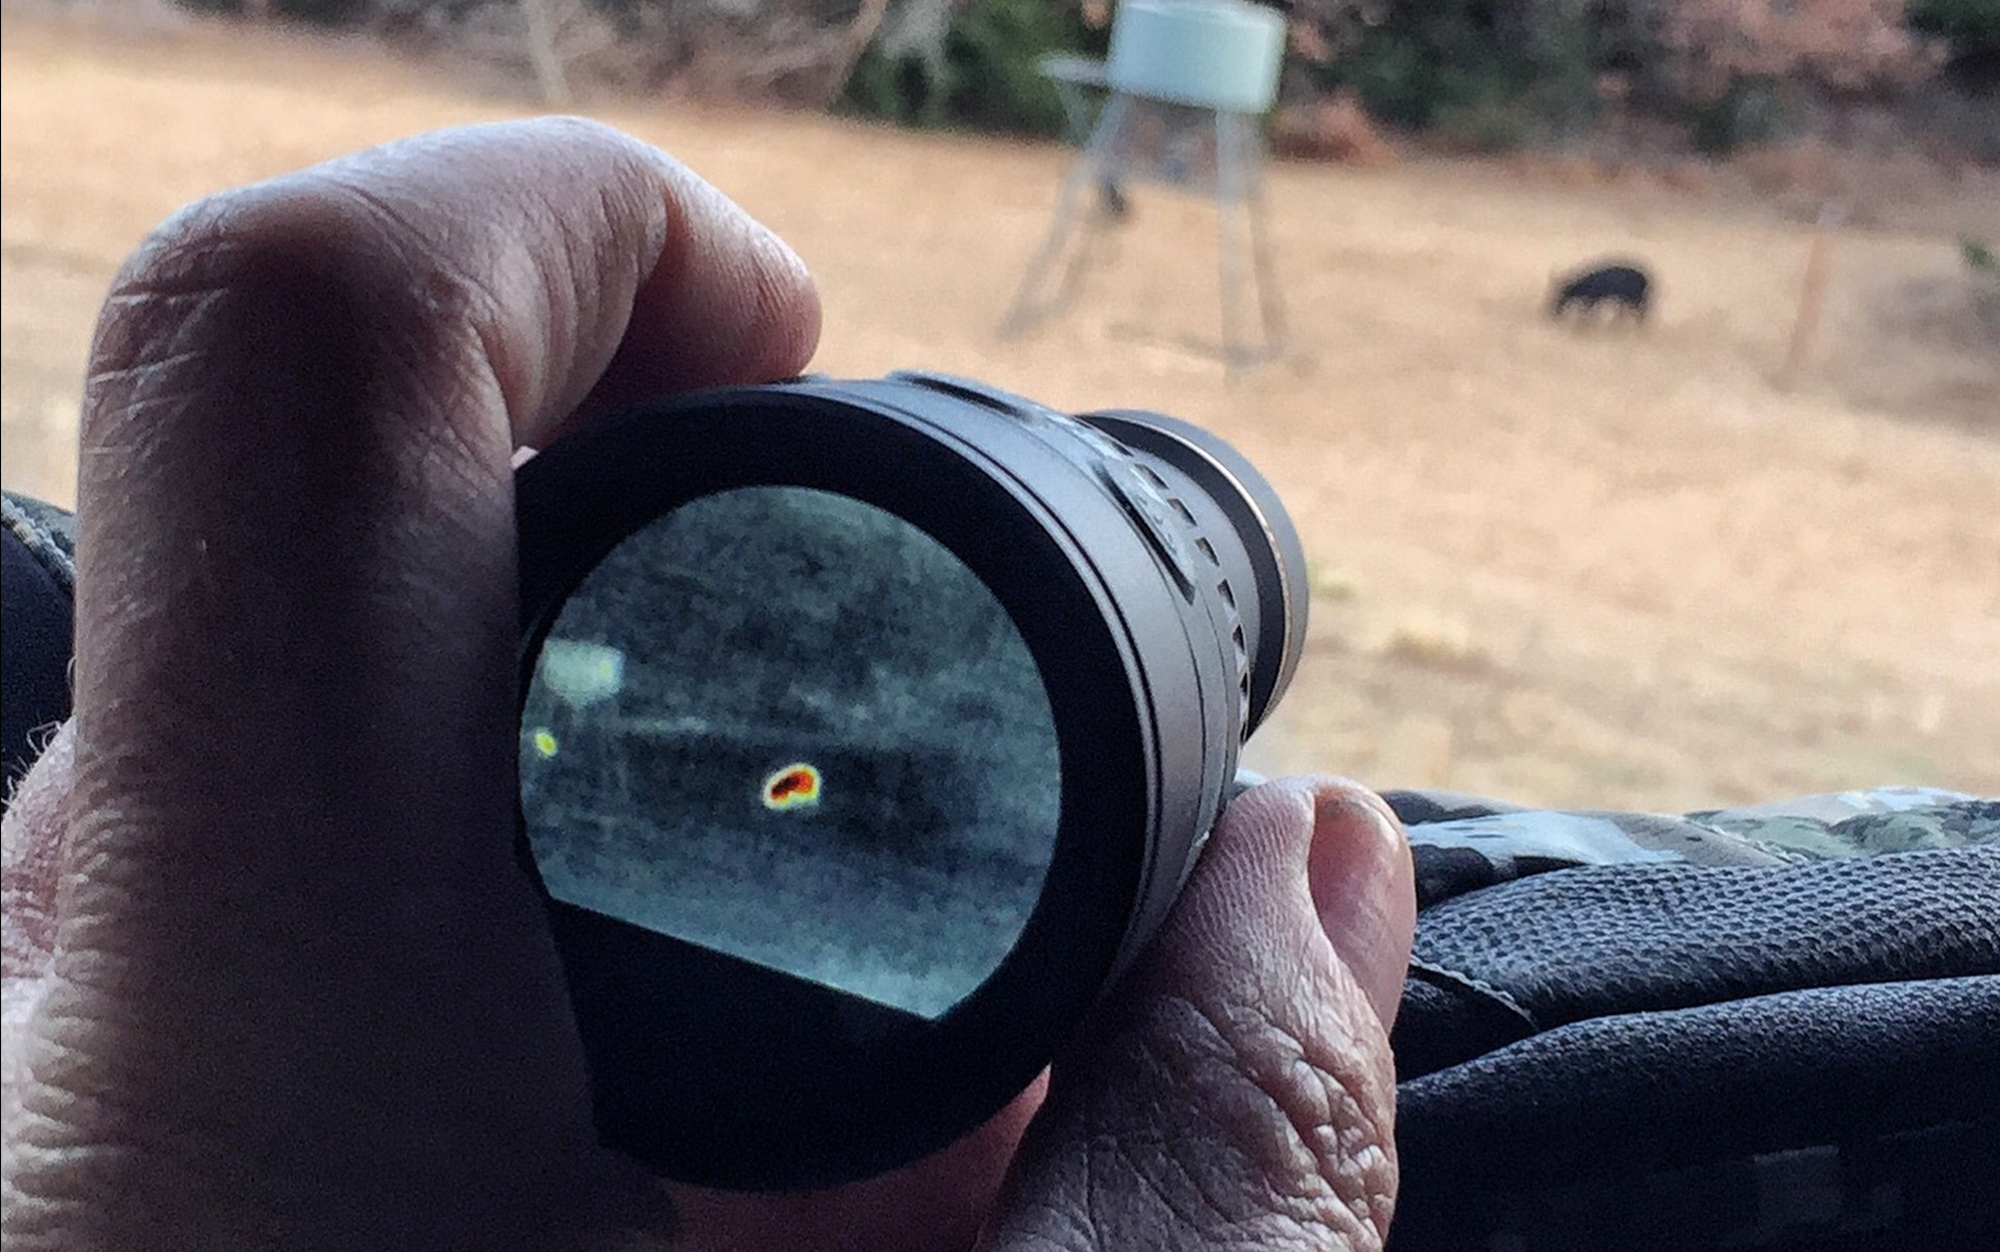 A hunter spotting a hog through a thermal scope.